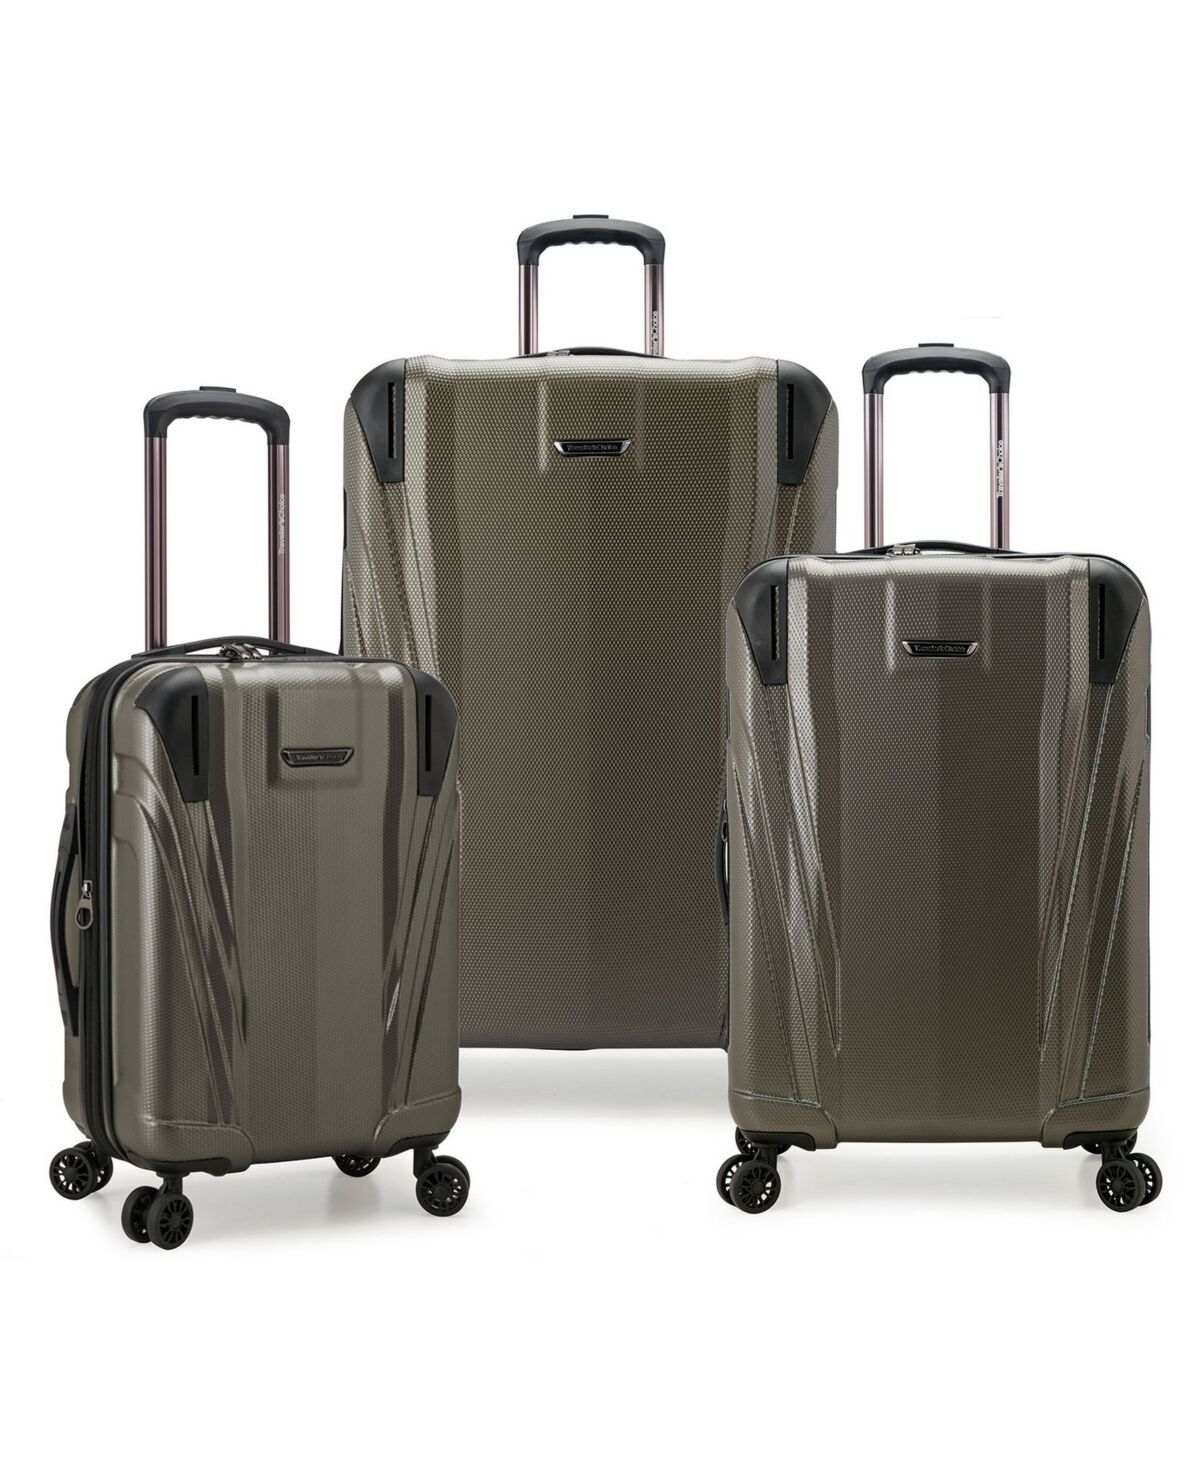 Traveler's Choice Valley Glen Hardside 3 Piece Luggage Set - Gray